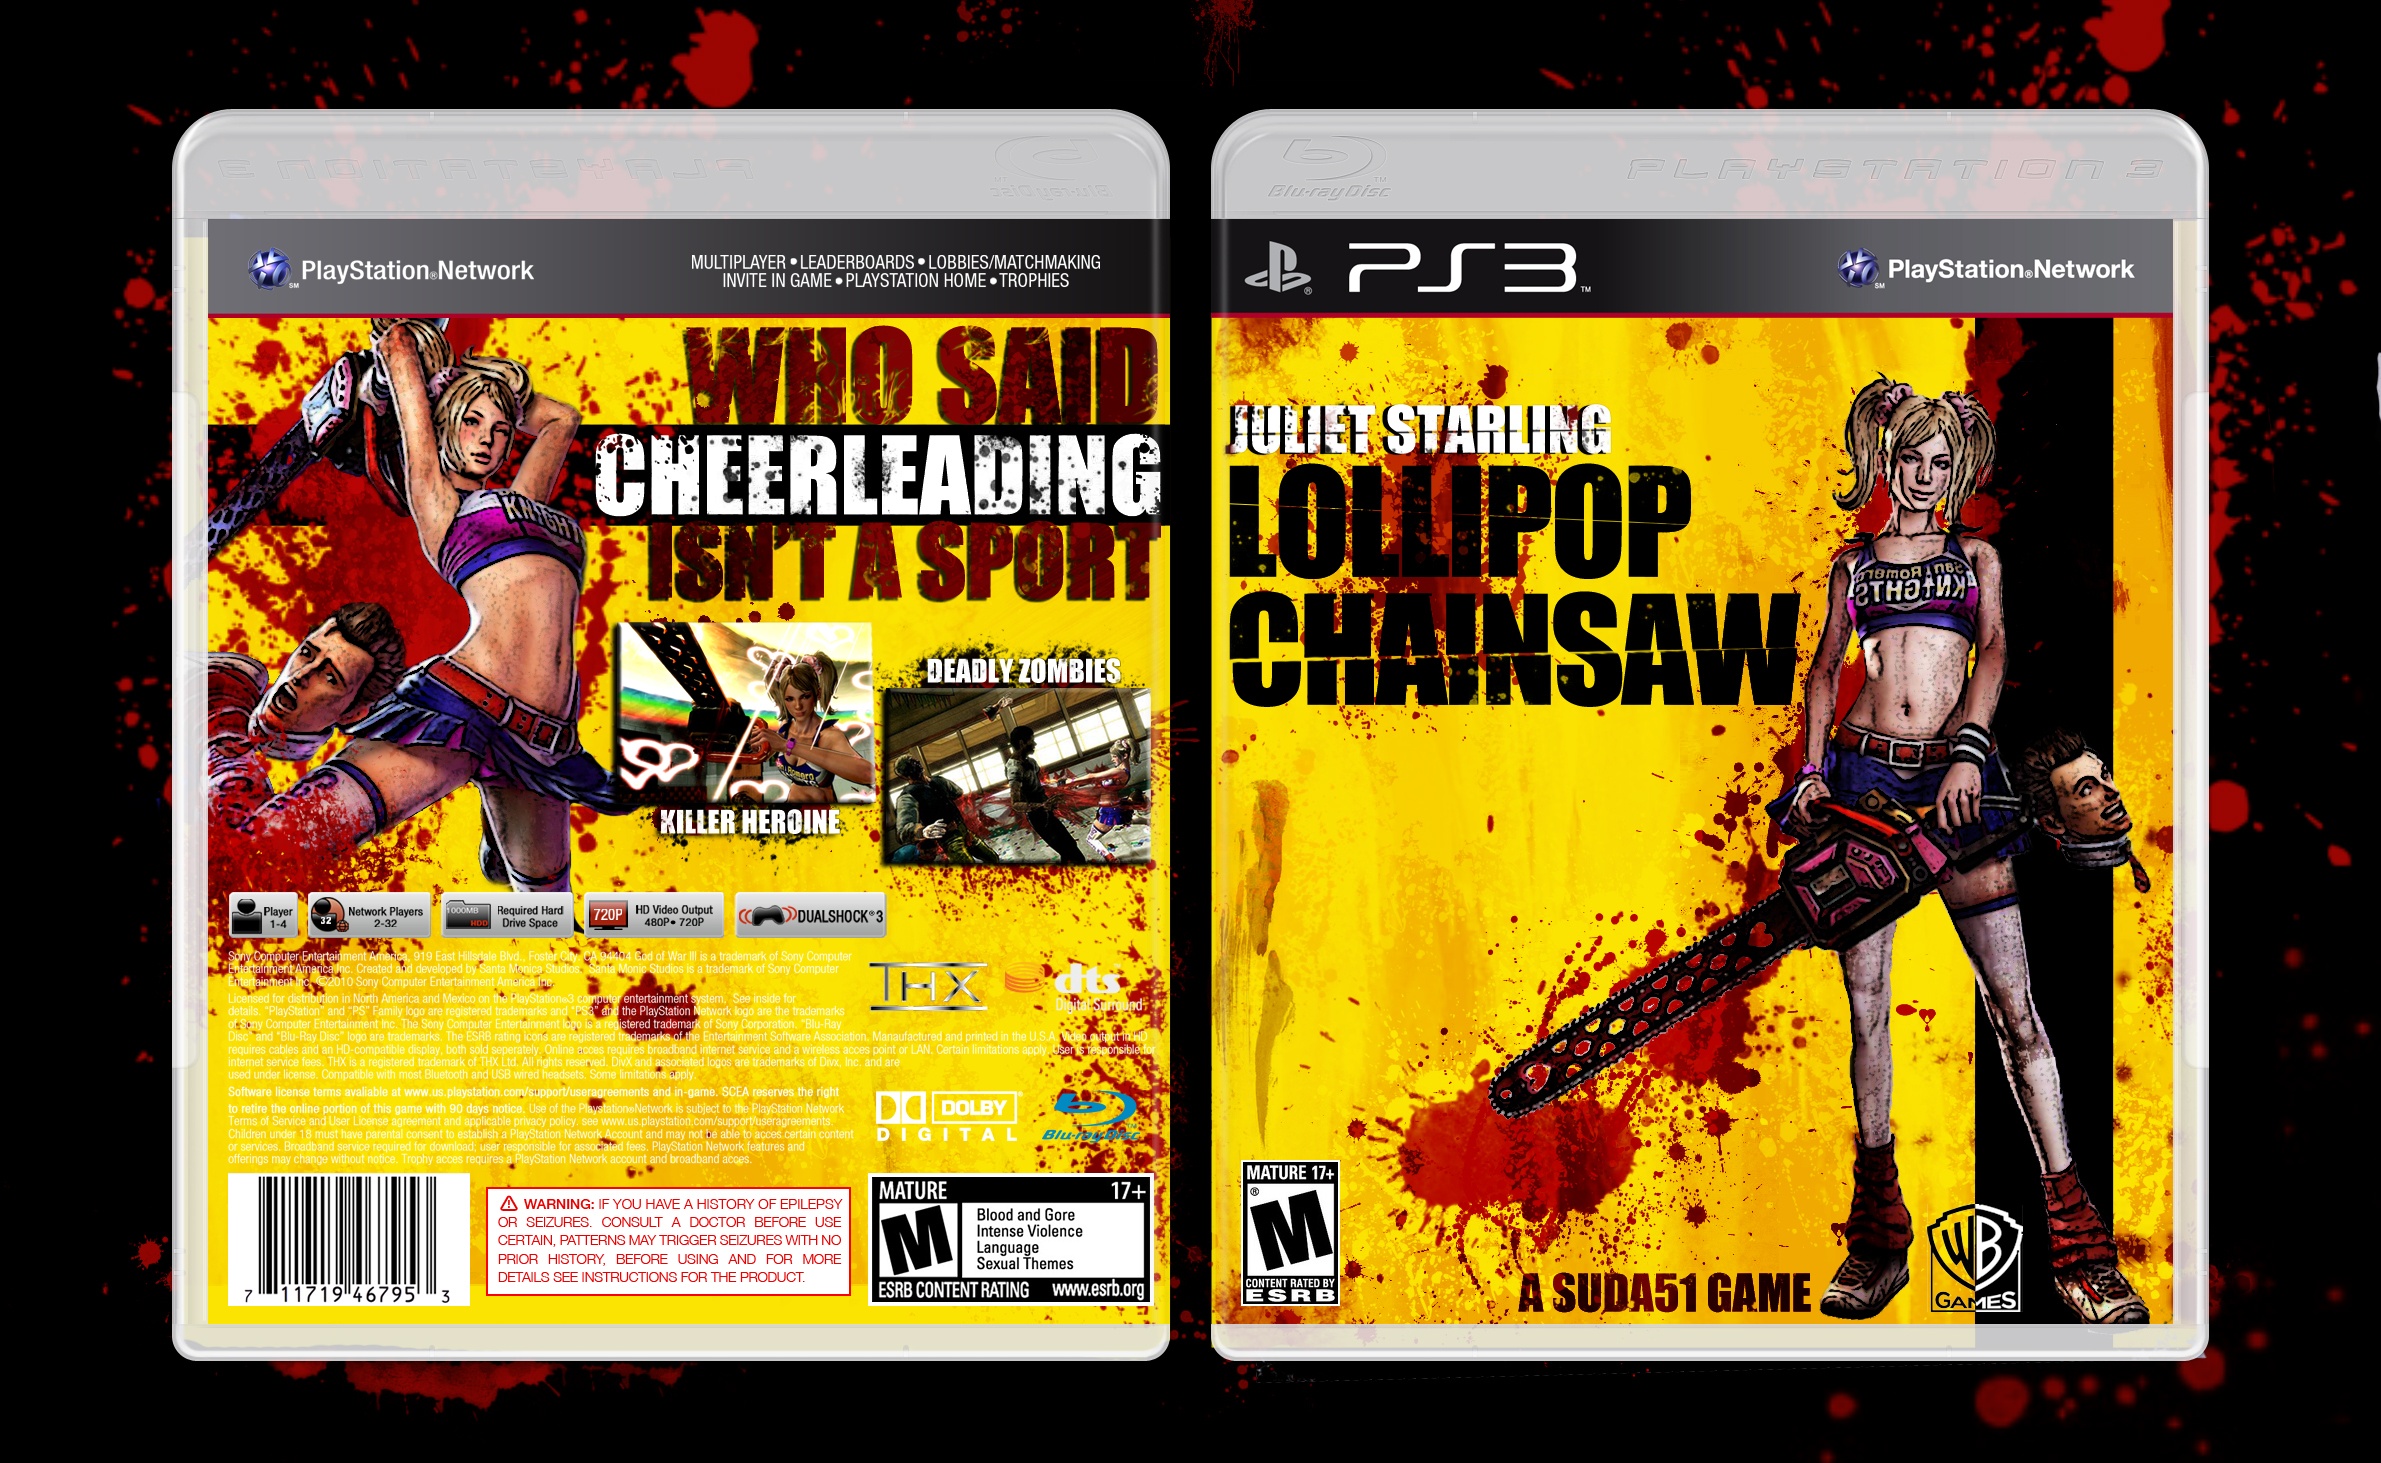 Lollipop ps3. Lollipop Chainsaw ps3 обложка. Lollipop Chainsaw ps3 Cover. Lollipop Chainsaw Xbox 360. Lollipop Chainsaw Box Art.